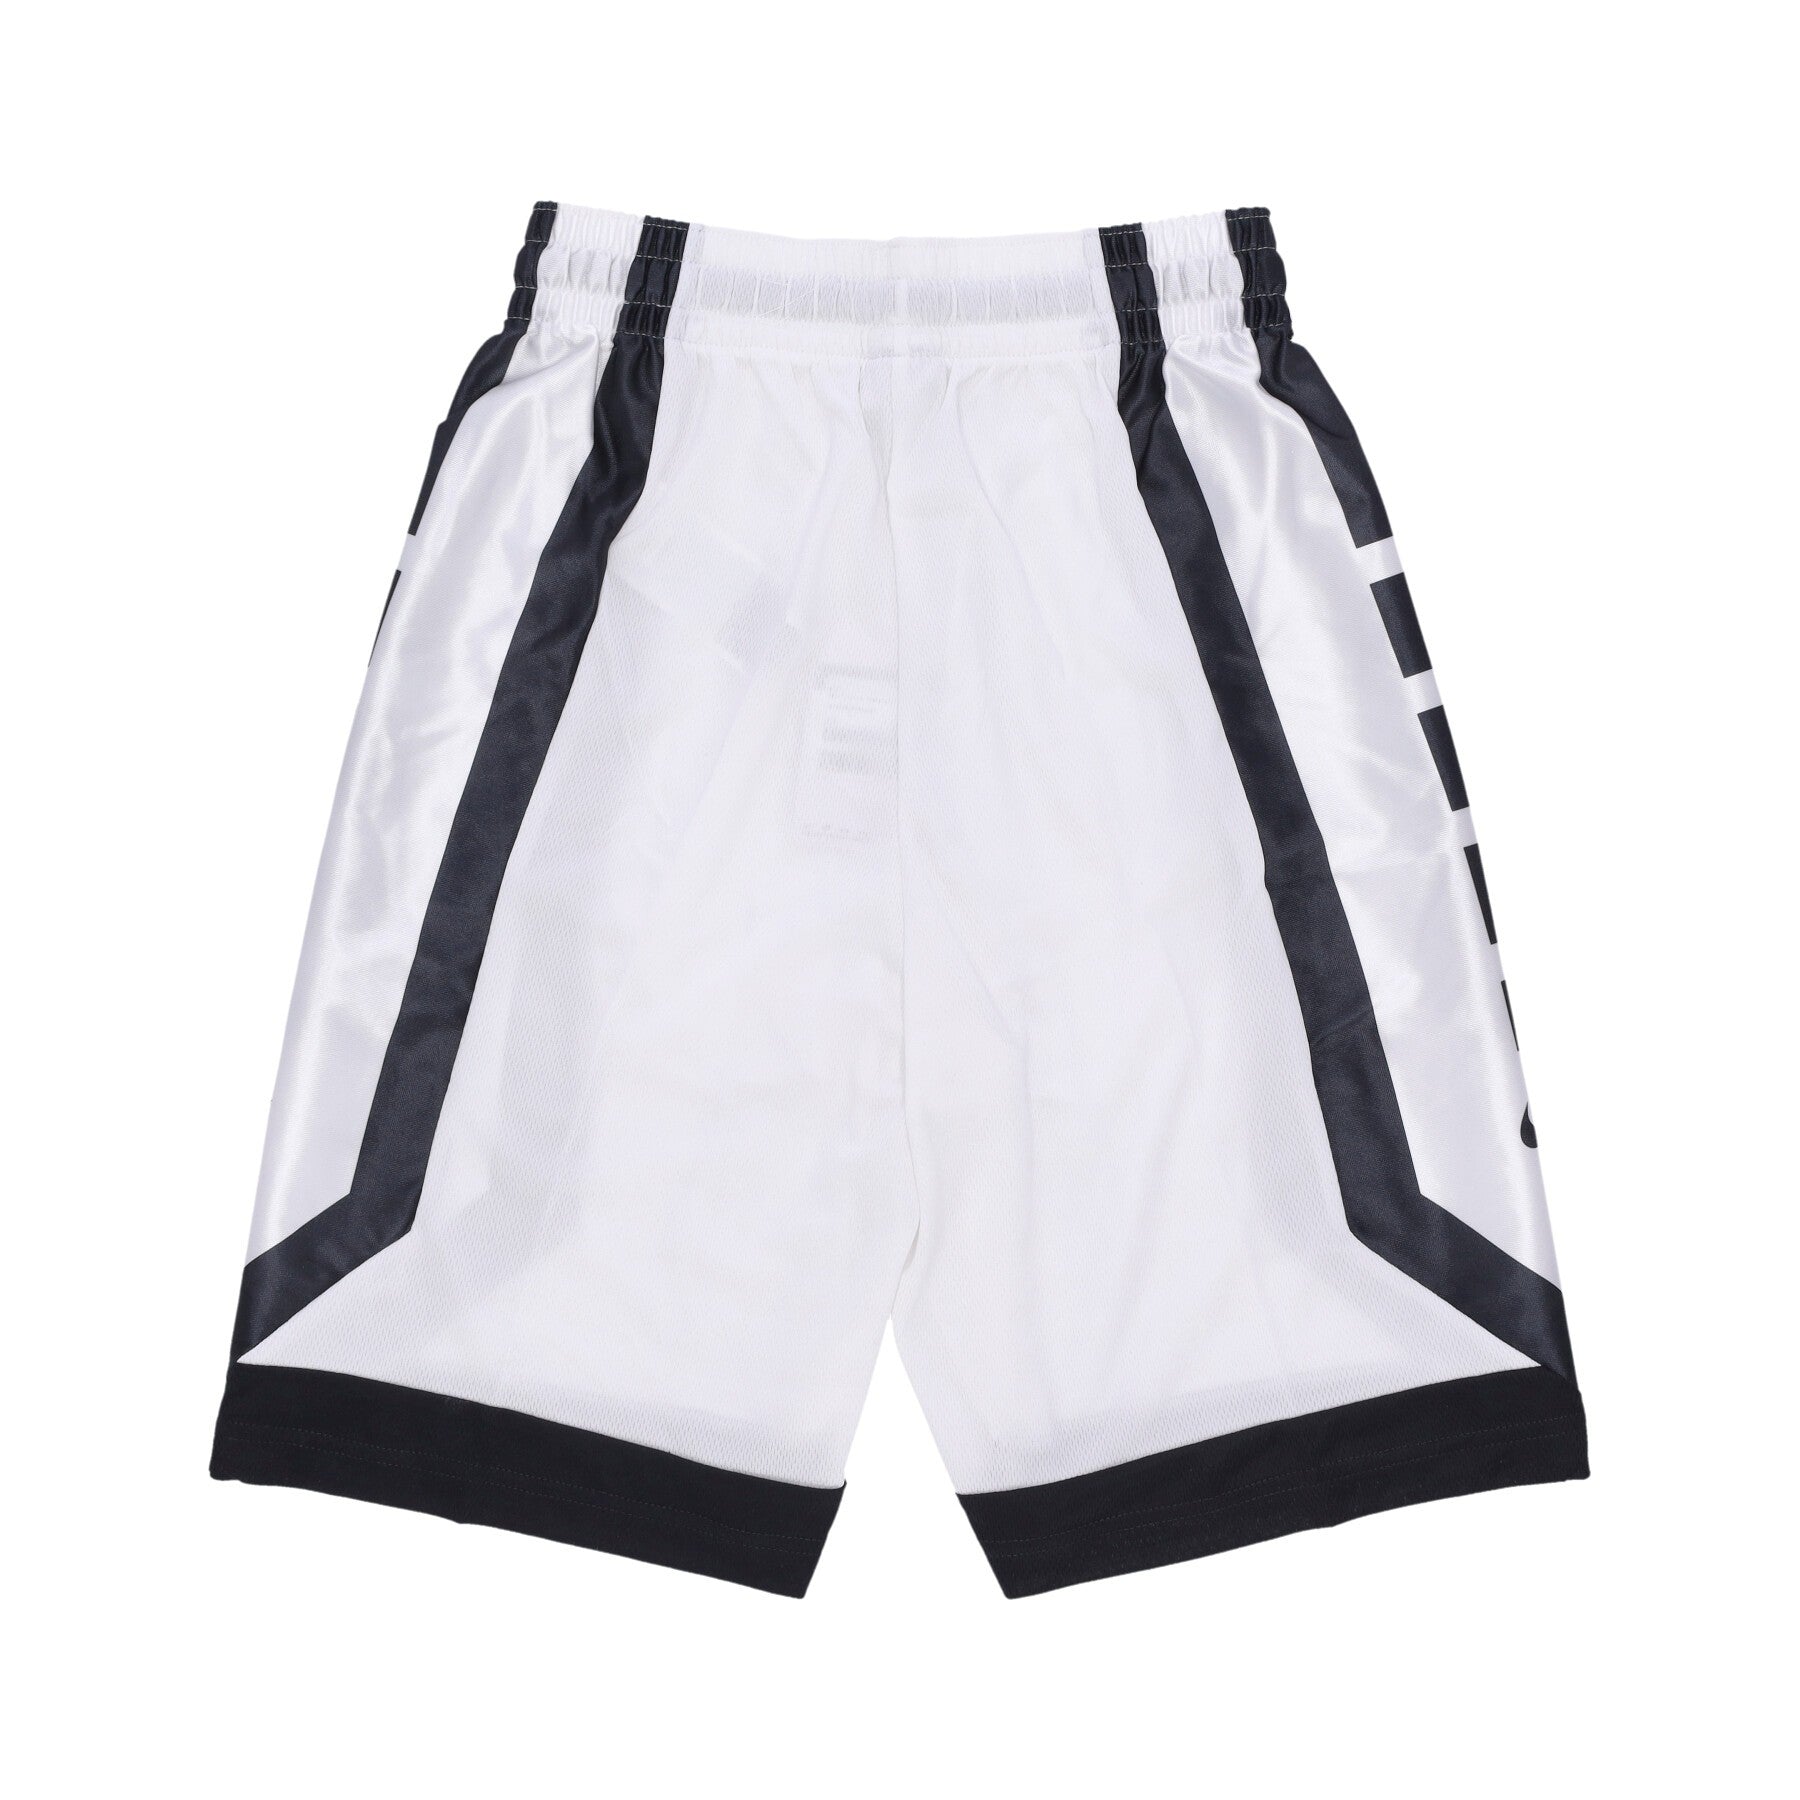 Men's Basketball Shorts Dri-fit Elite Basketball Shorts White/black/black